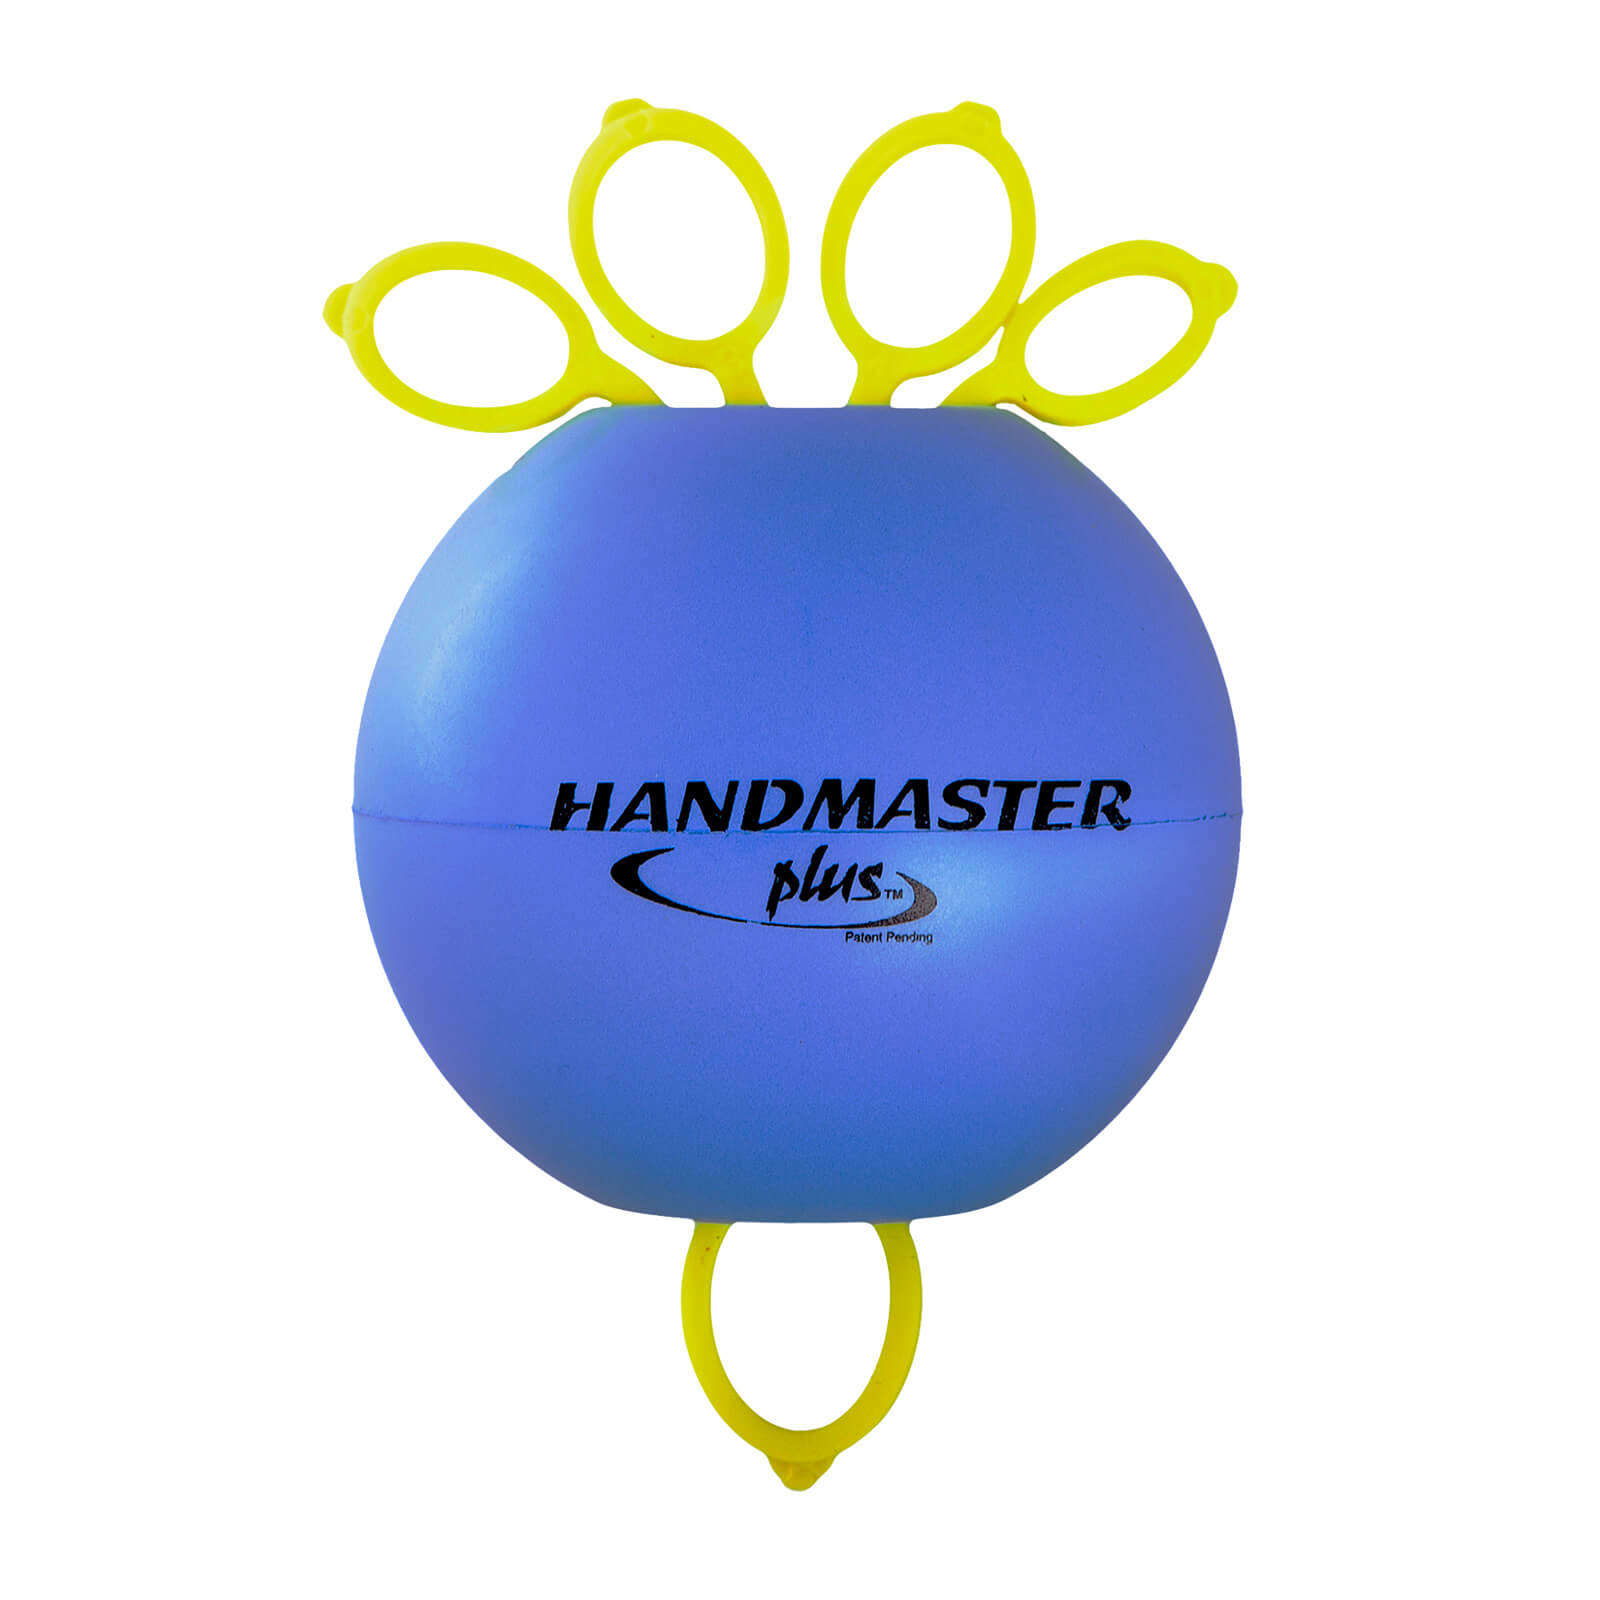 Handmaster Plus - Mauve et jaune - Souple